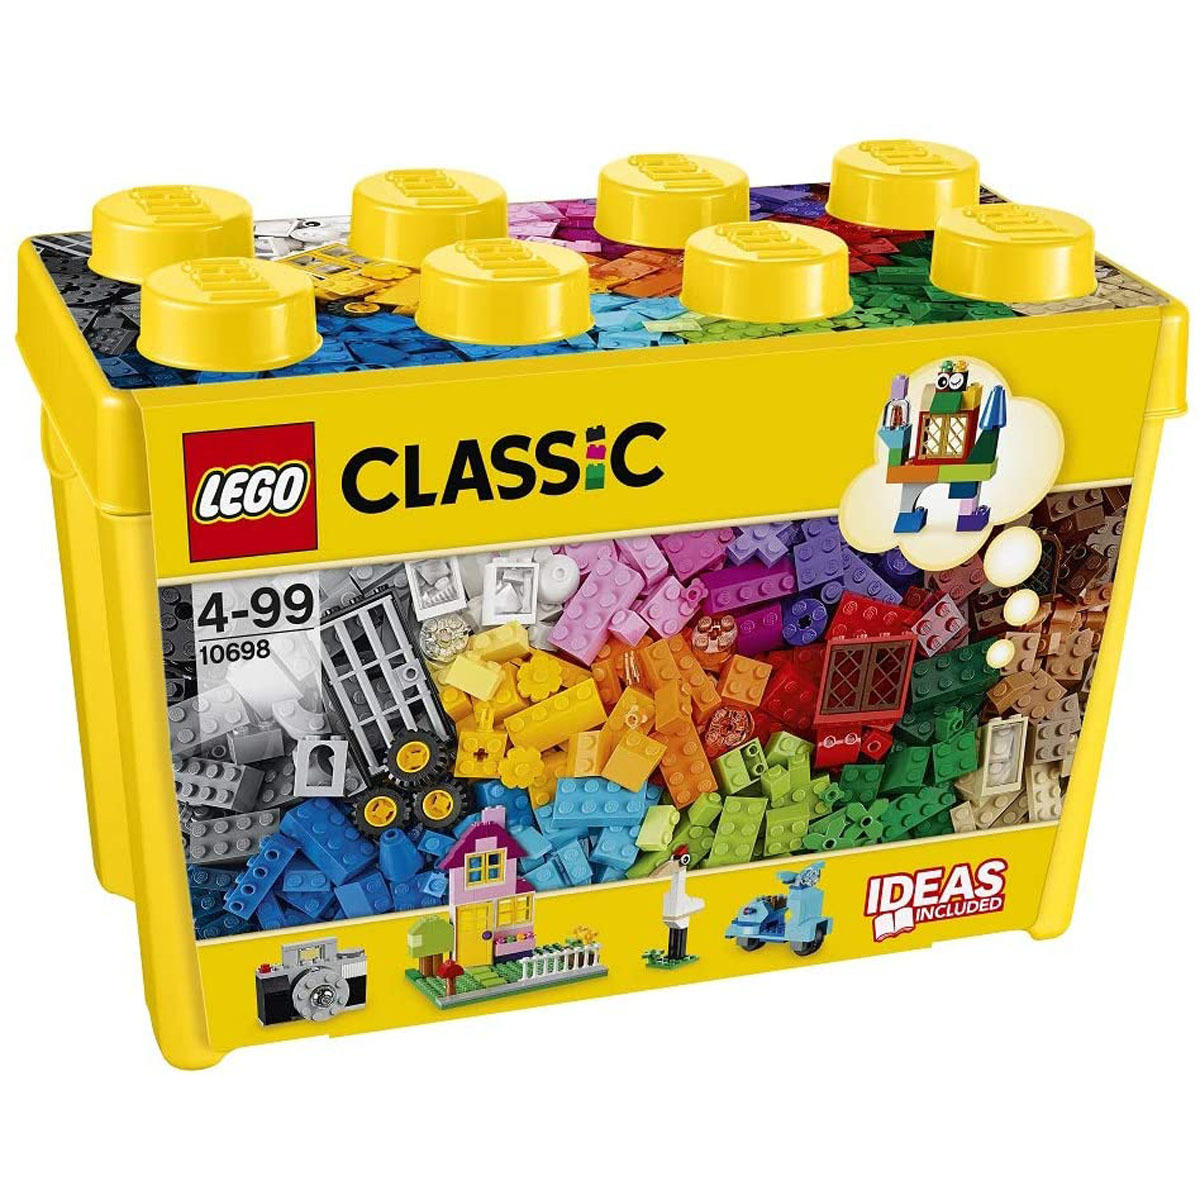  LEGO Classic Large Creative Brick Box - 10698